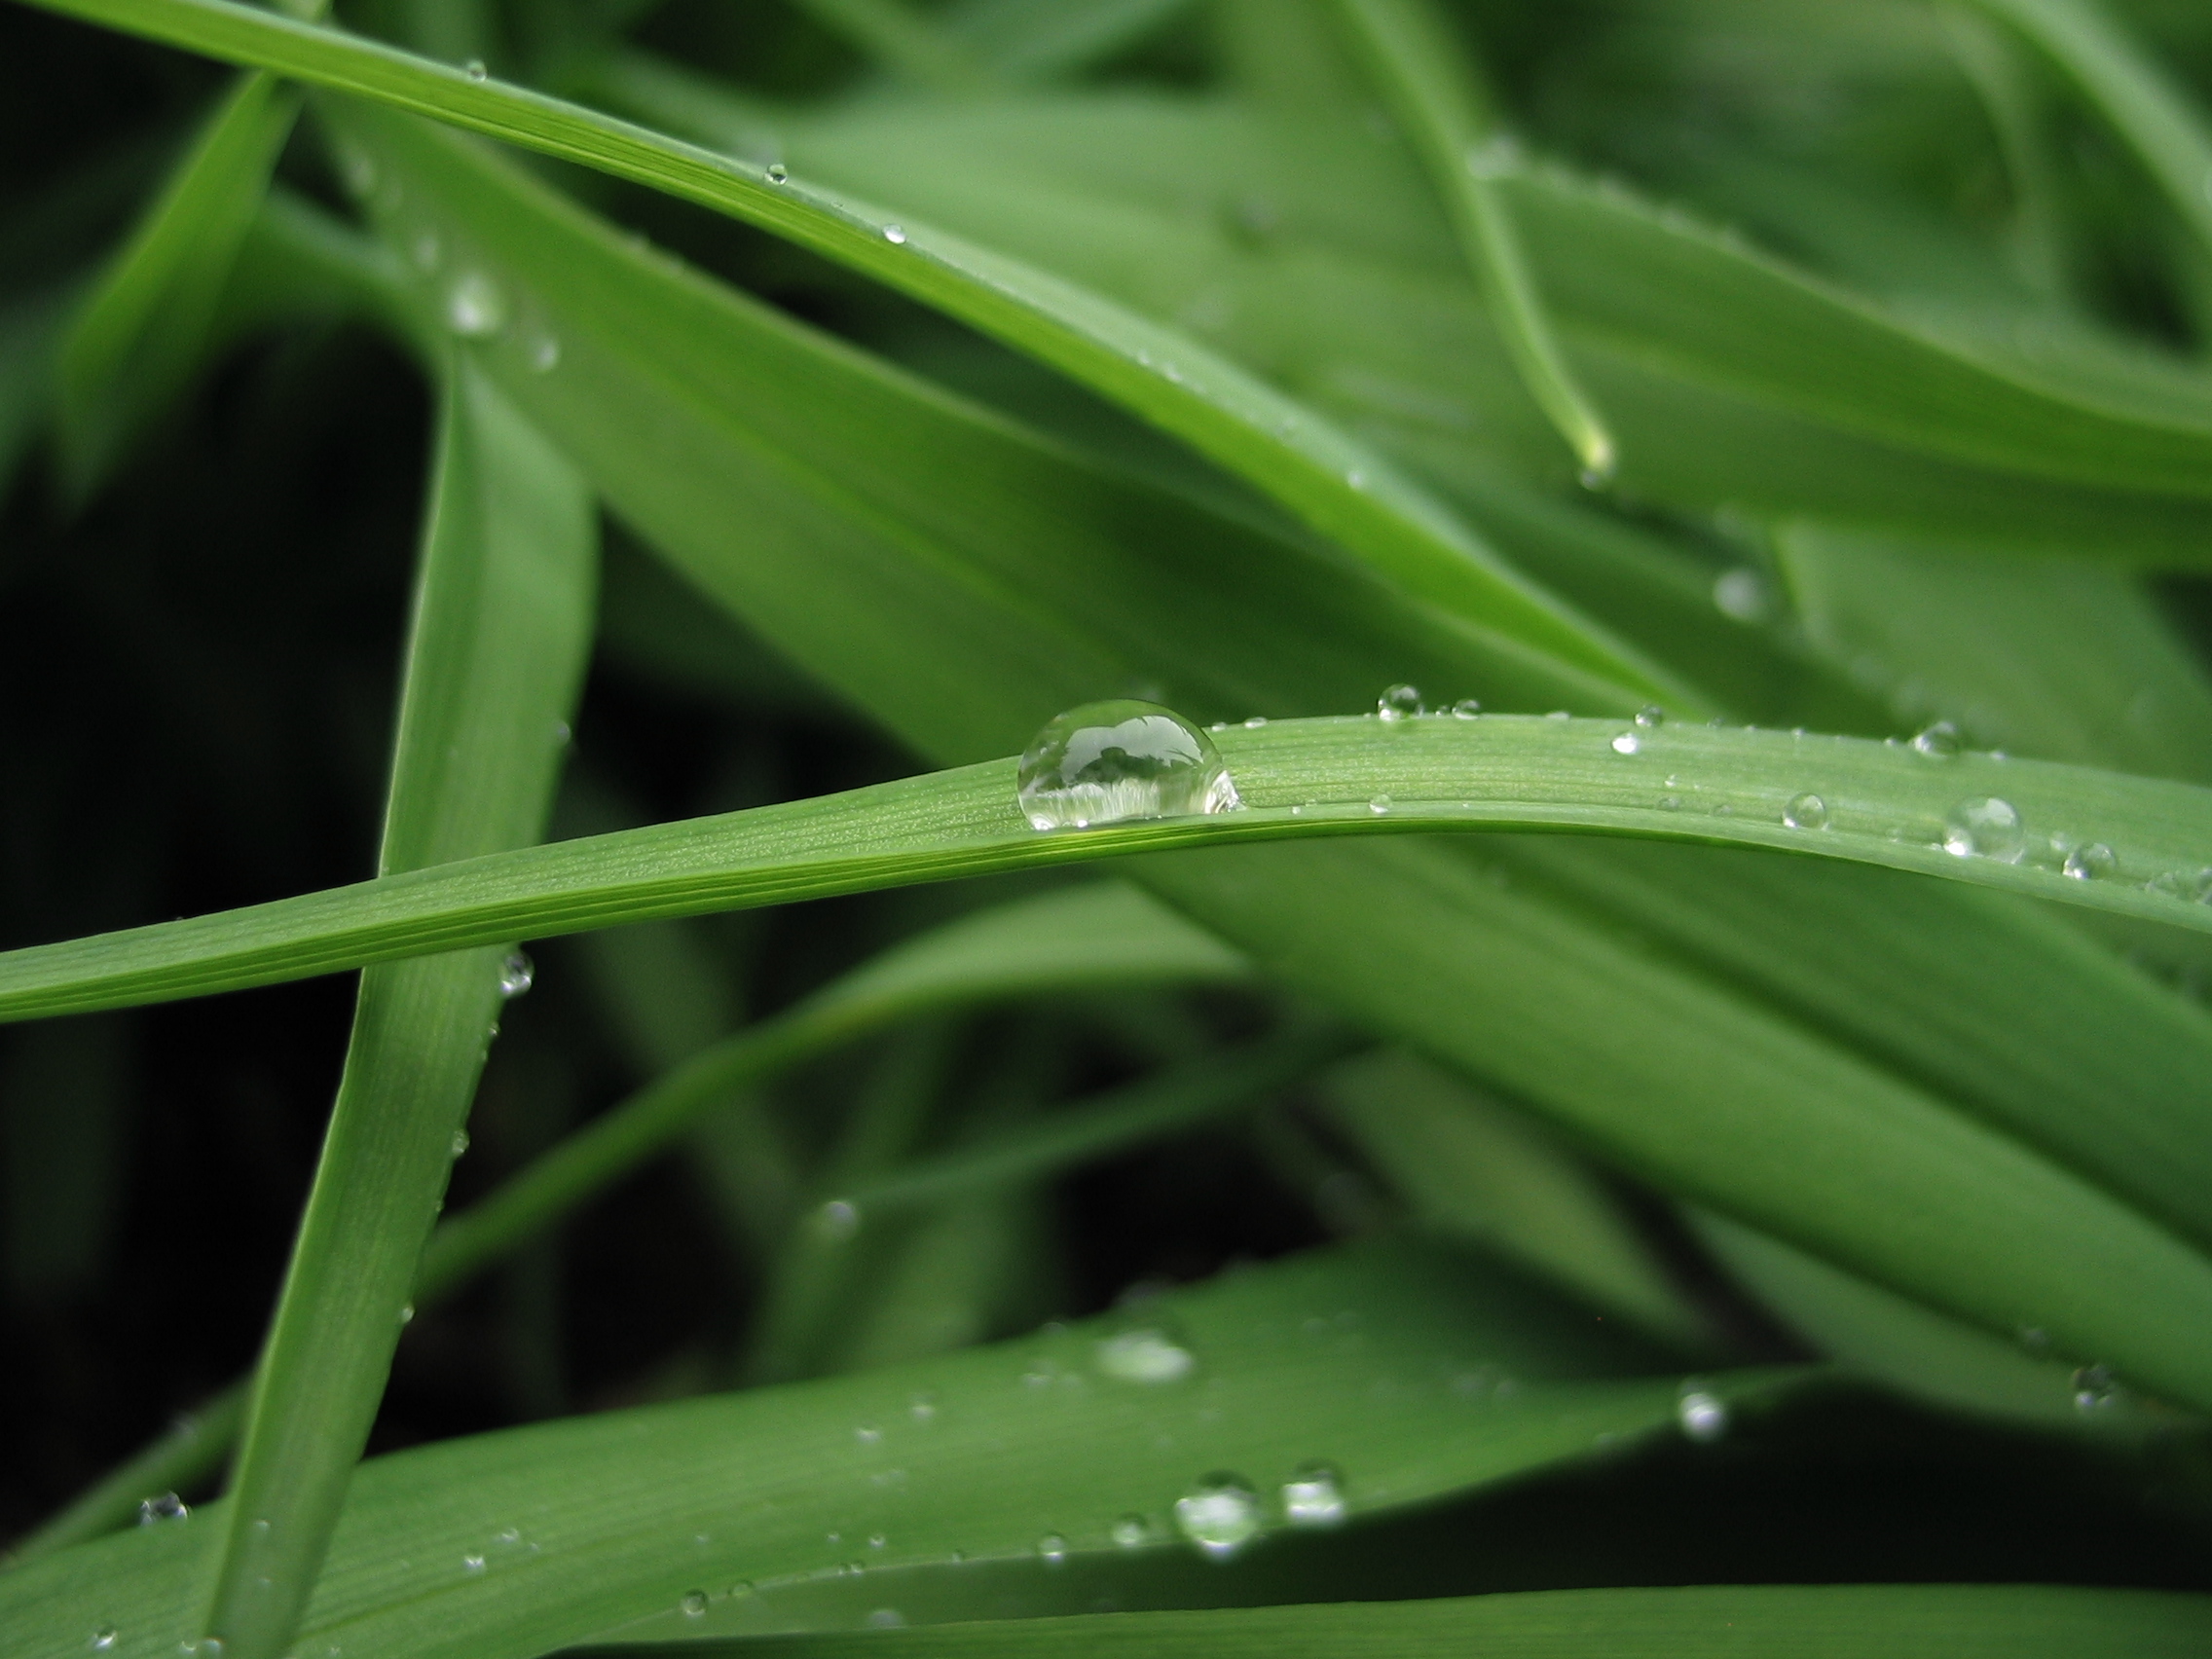 File:Dew on green Plant.jpg - Wikimedia Commons